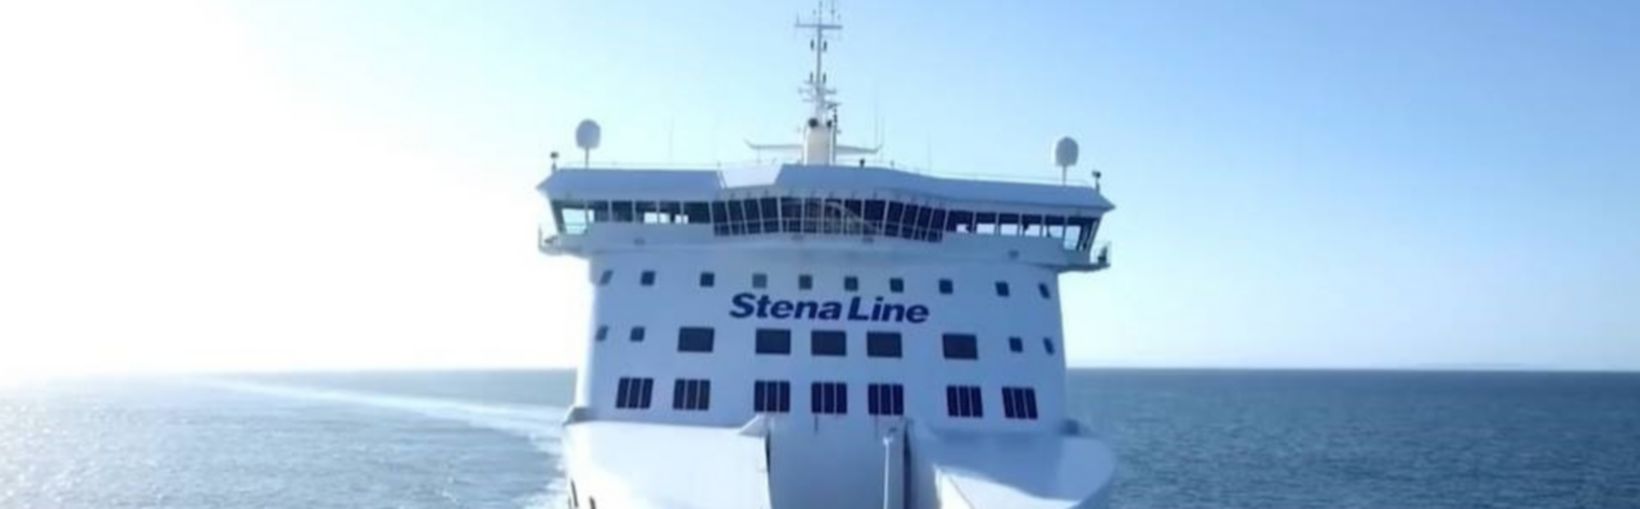 Stena Superfast VIII ferry en mer